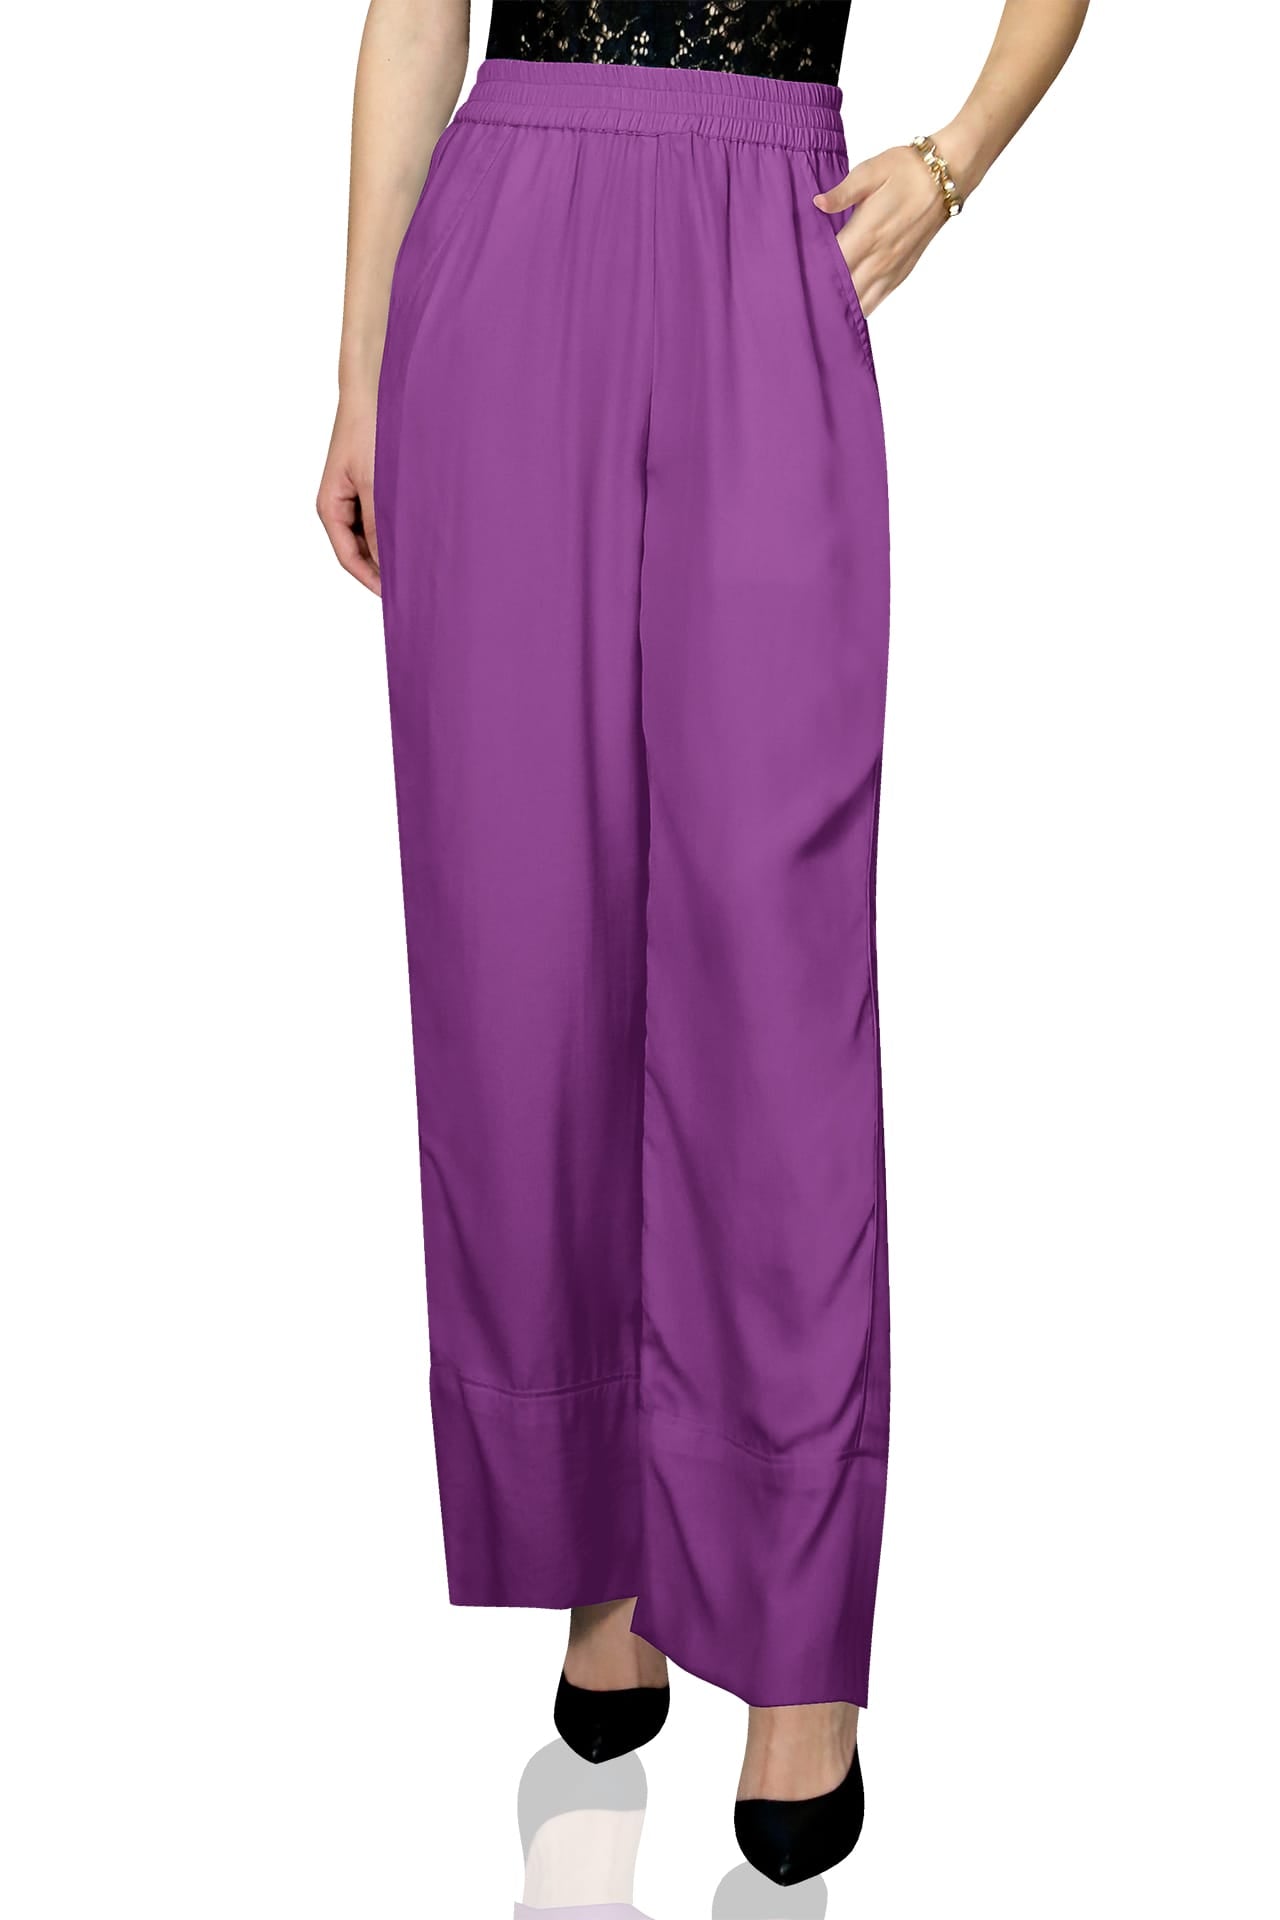 "plazzo pant for women" "Kyle X Shahida" "purple pants women" "plazzos for women"